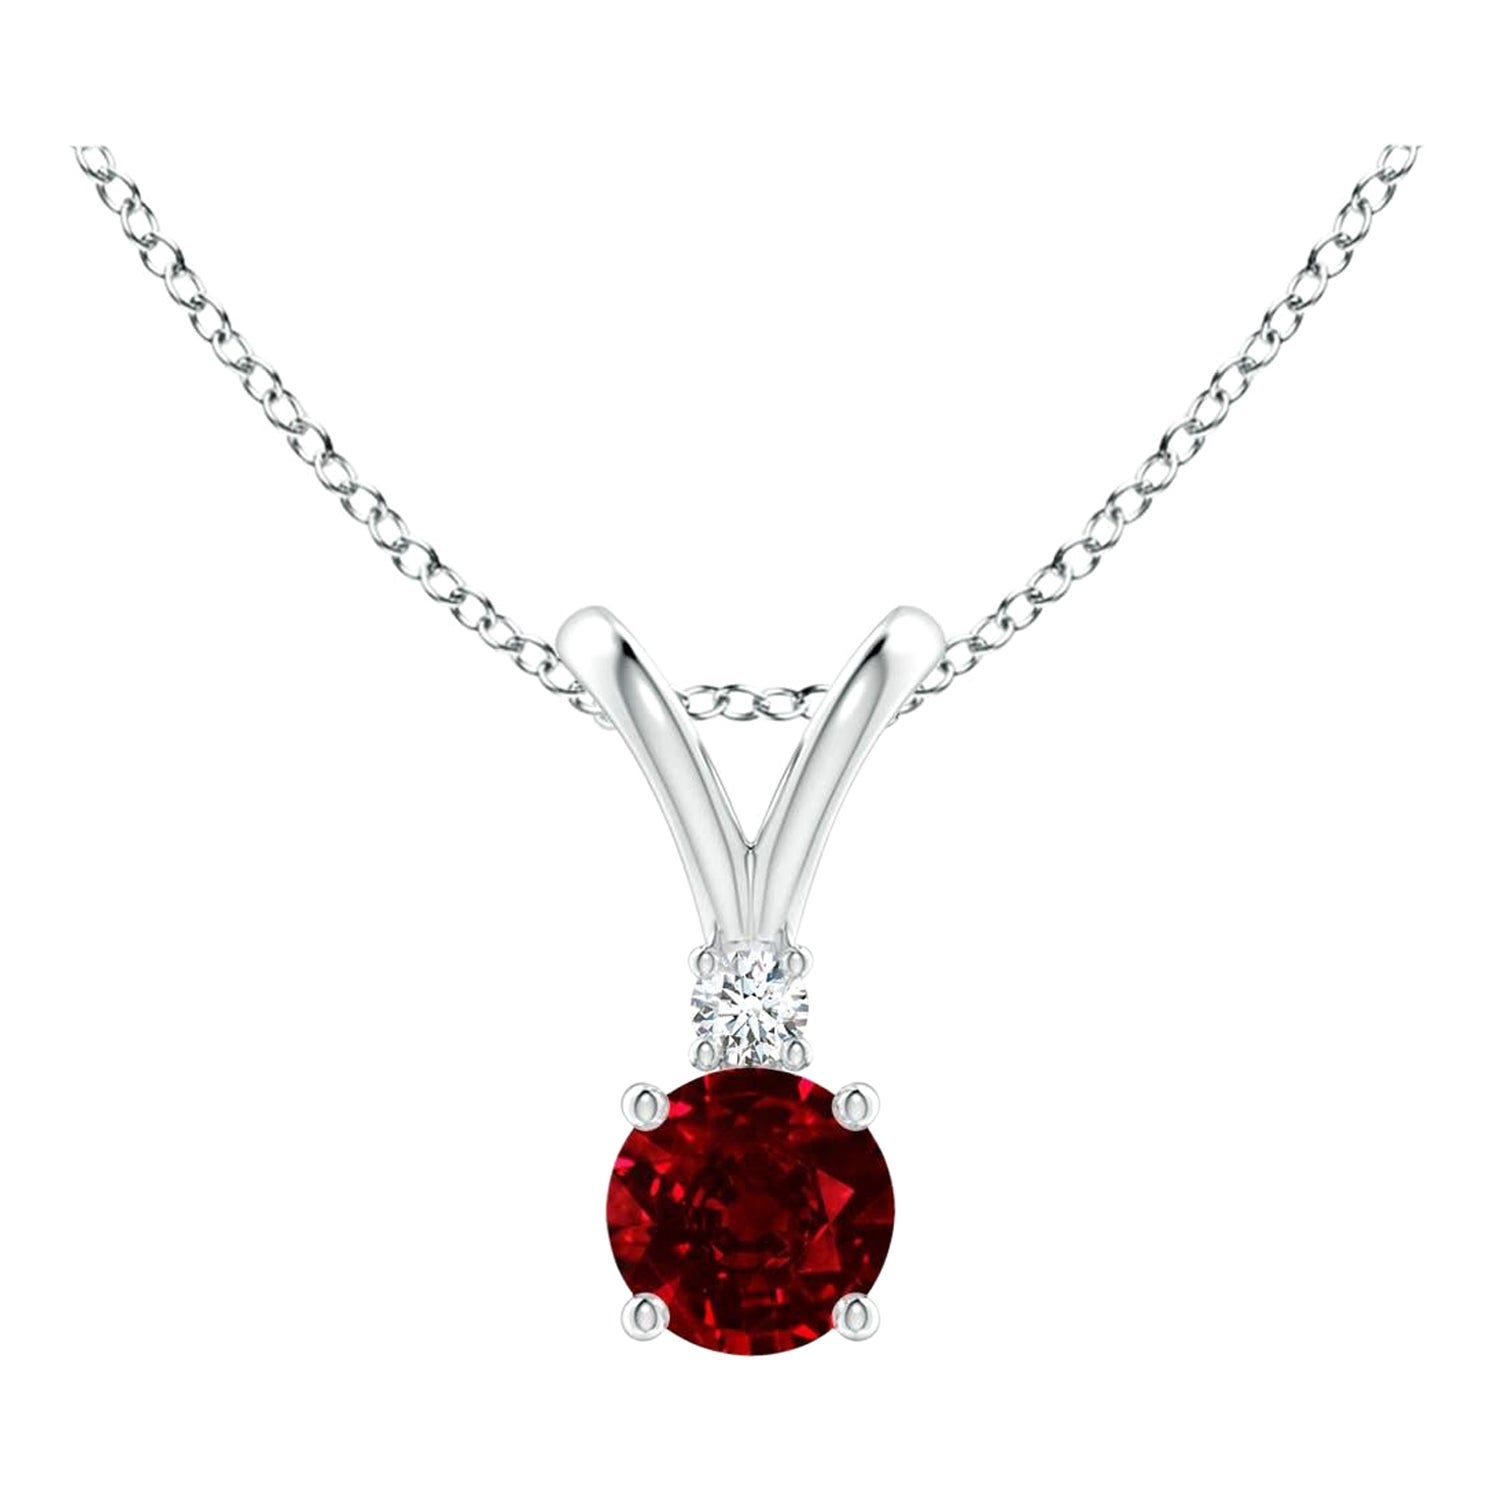 ANGARA Pendentif solitaire en platine avec rubis naturel rond de 0.34 carat et diamants